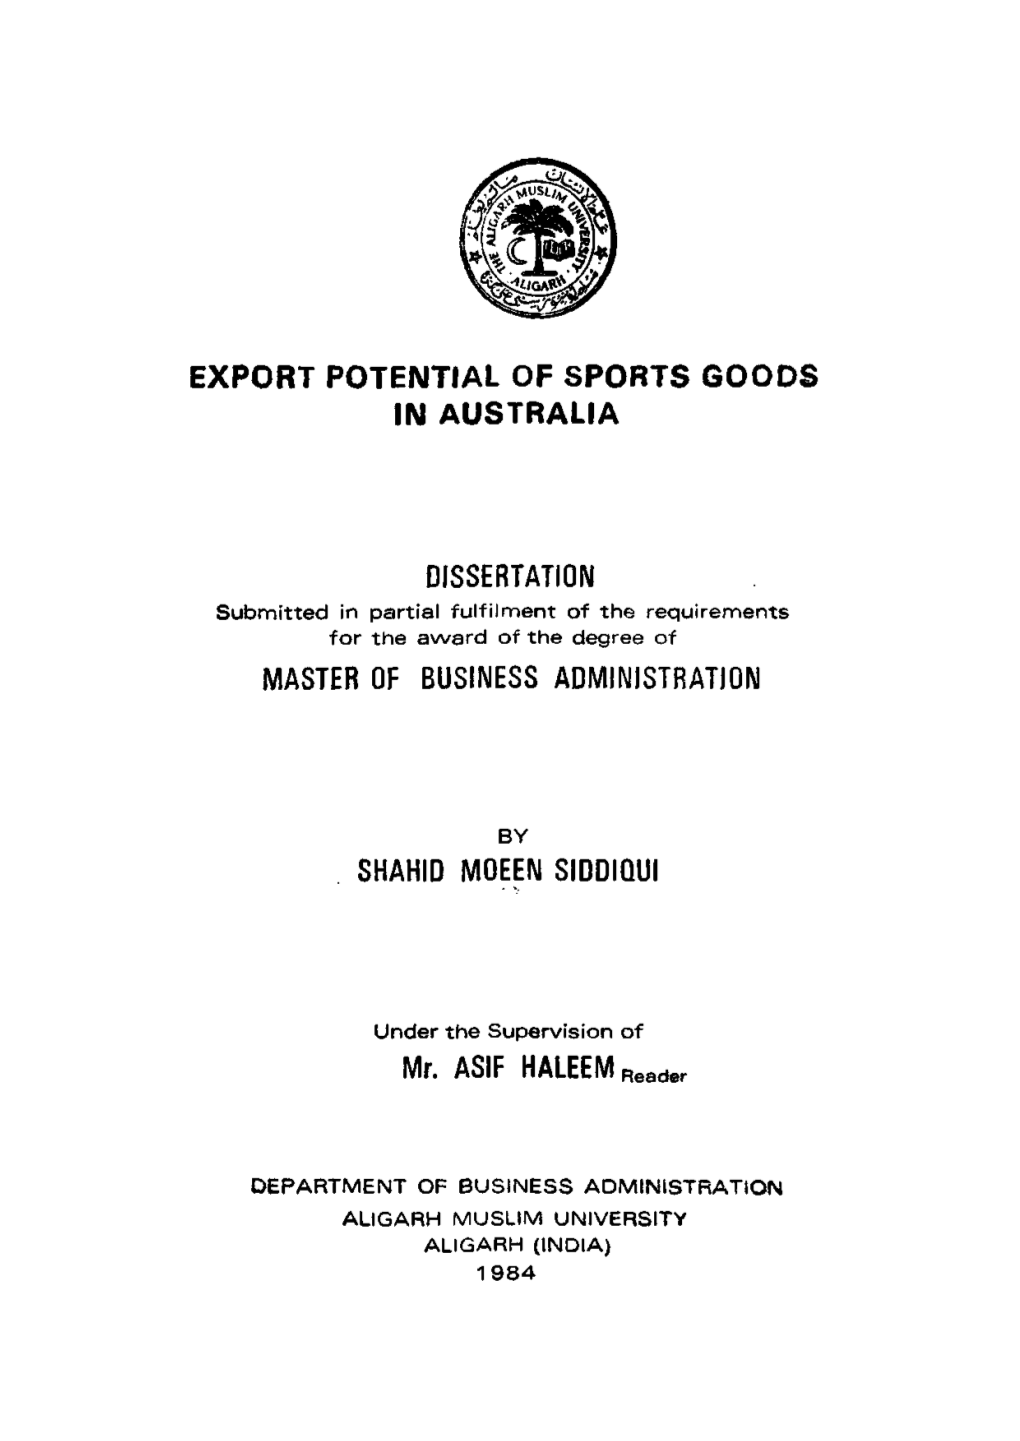 Export Poteimtial of Sports Goods in Australia